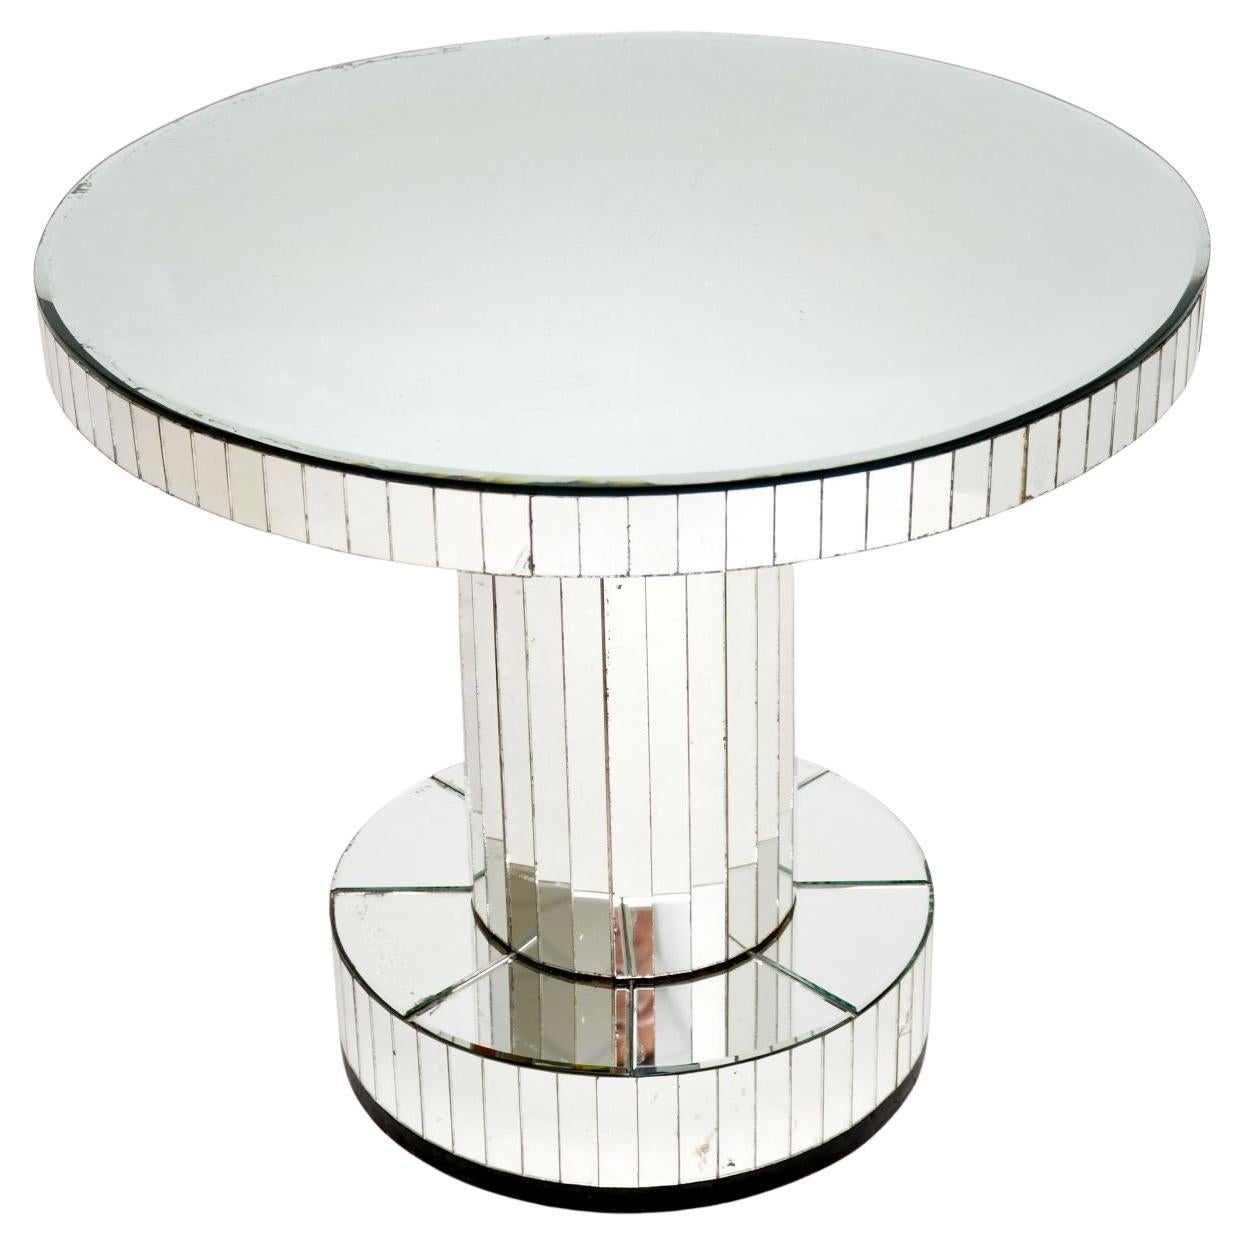 Original Art Deco Period Mirrored Glass Occasional / Coffee Table